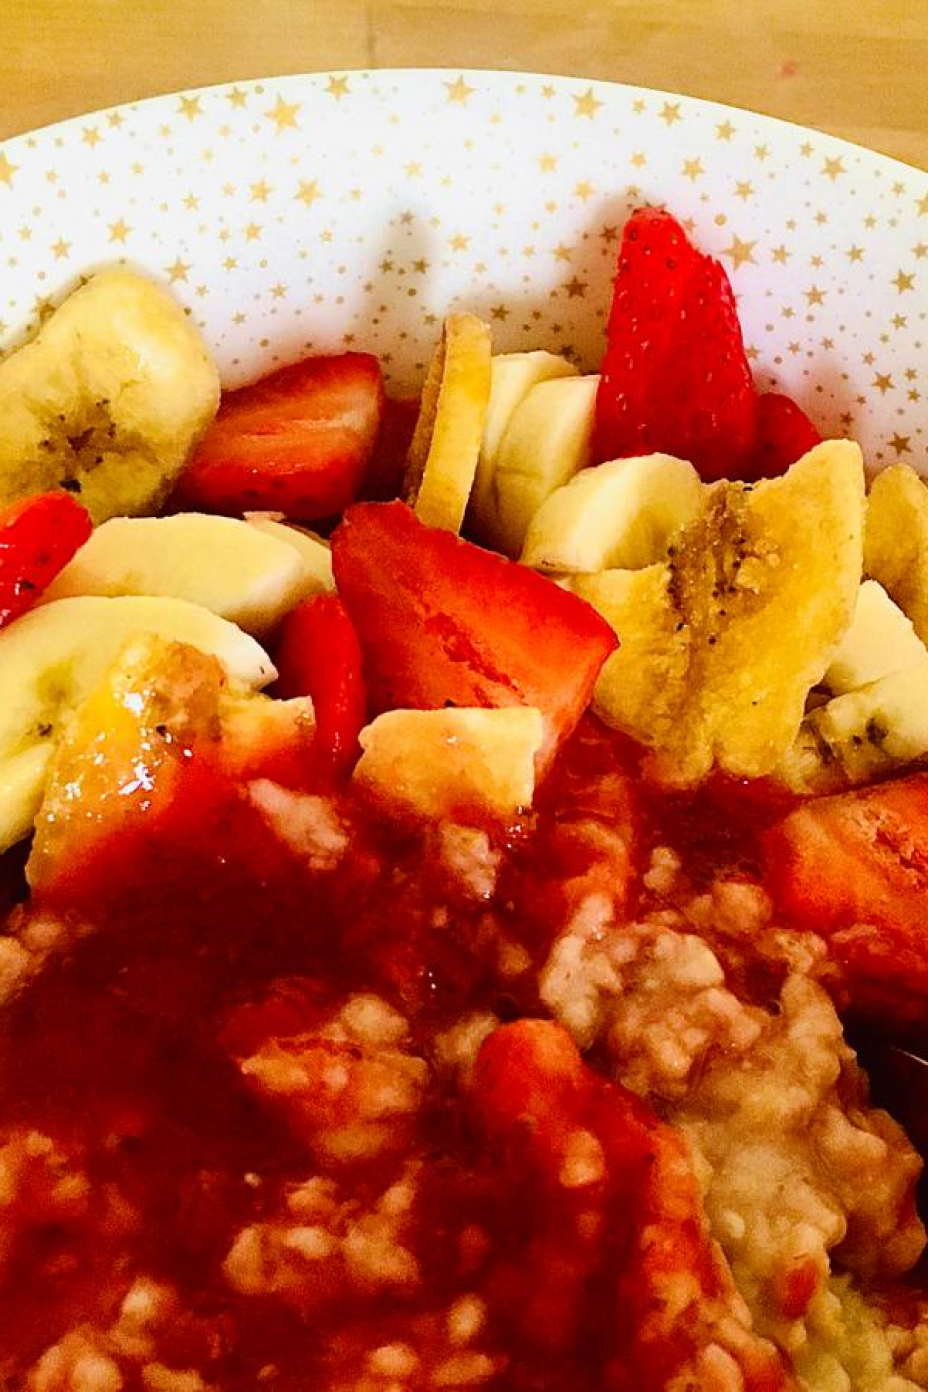 A bowl of strawberry and banana sunrise porridge